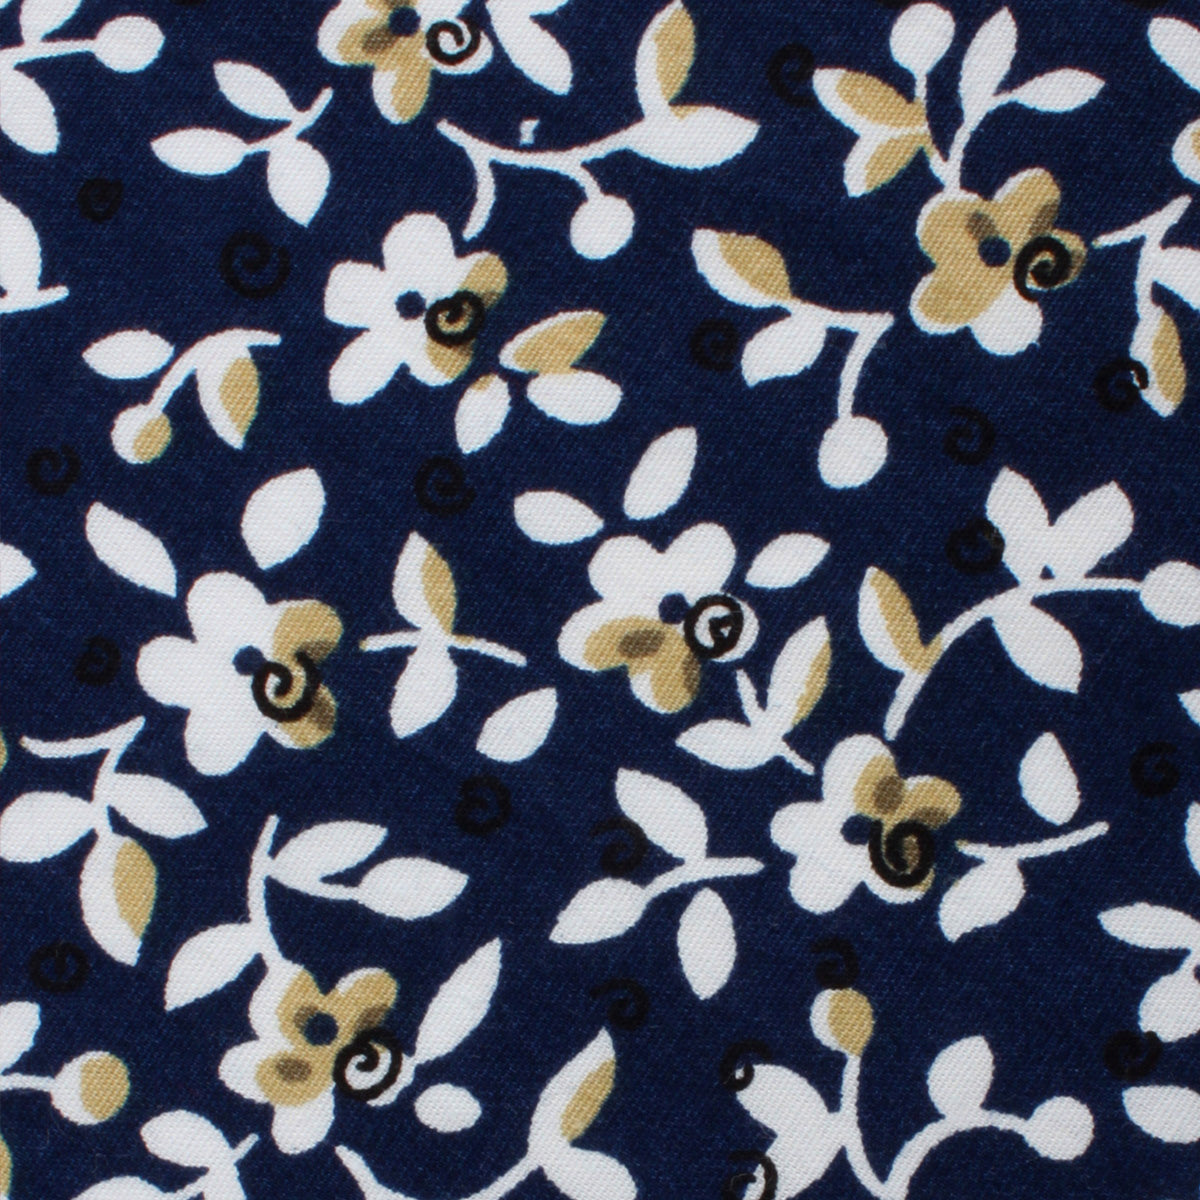 Yukata Navy Blue Floral Fabric Swatch